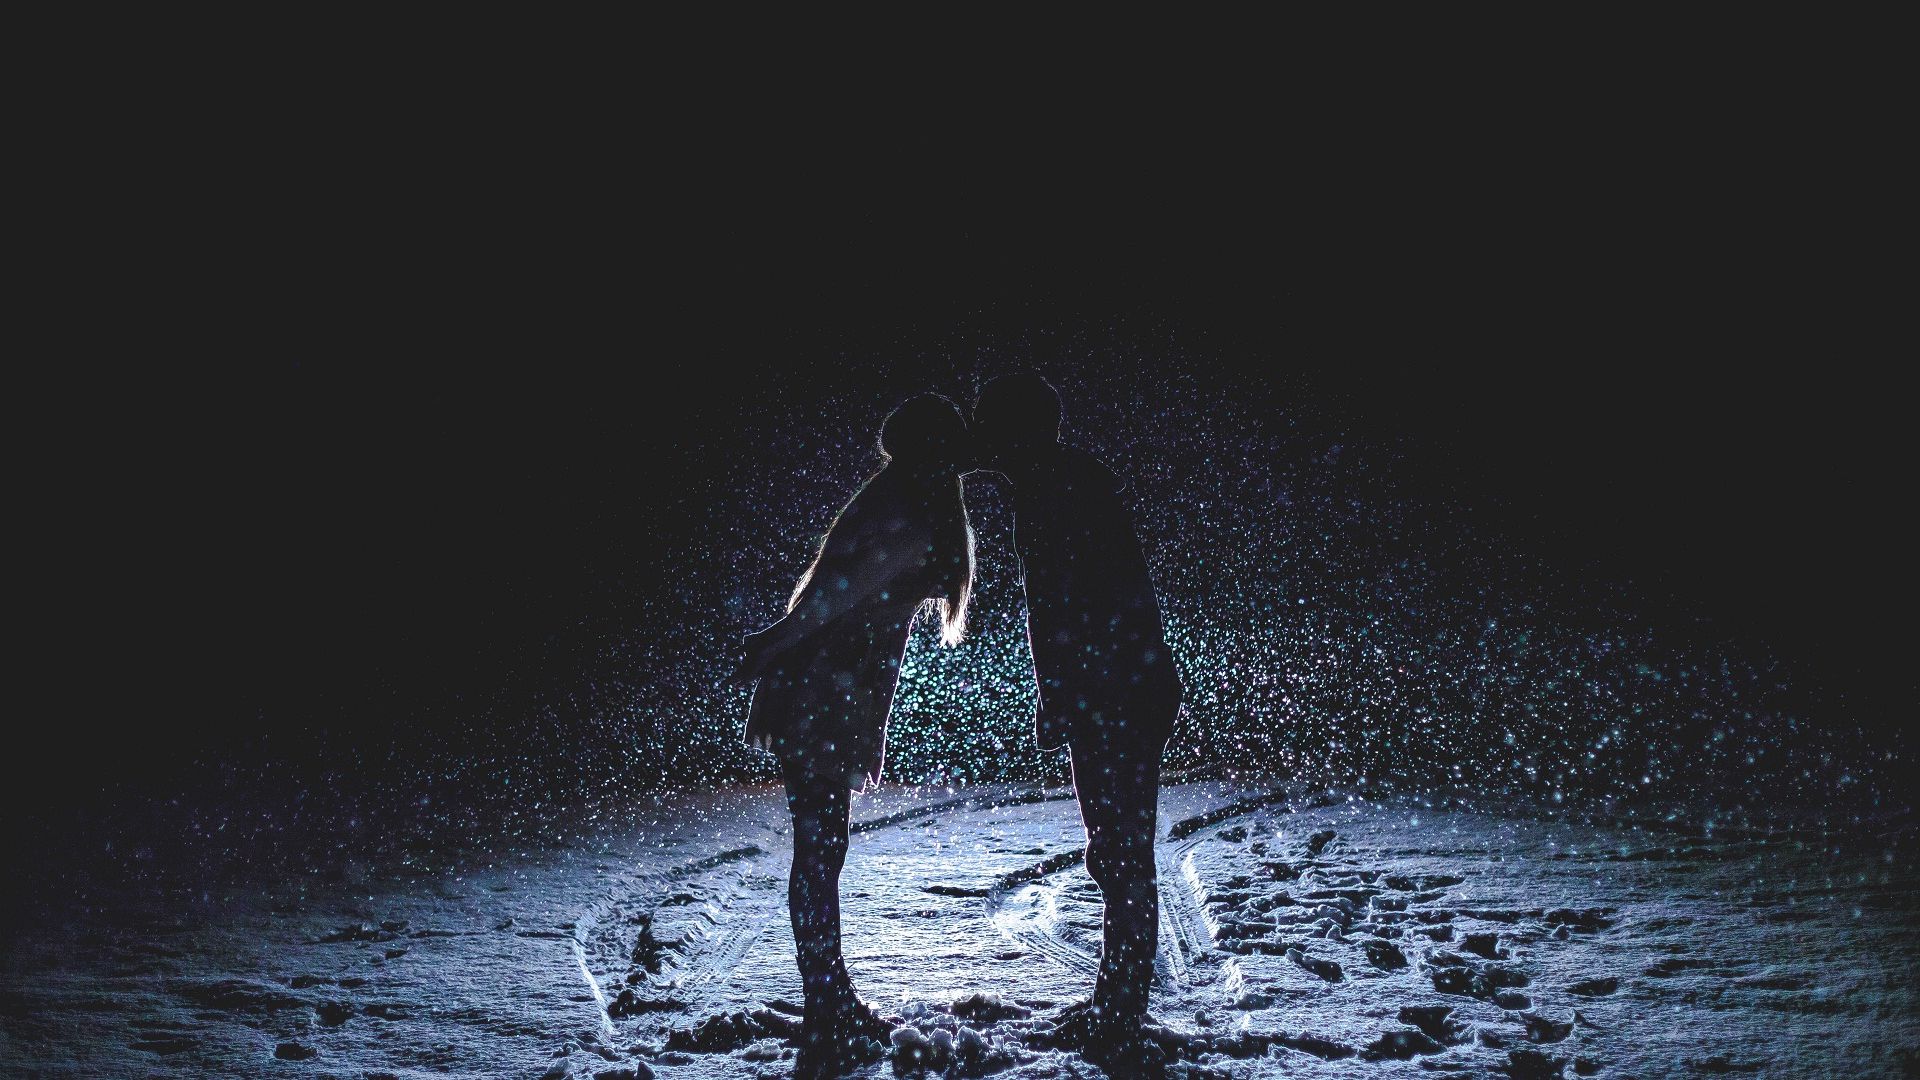 Wallpaper Kissing couple in rain at romantic night